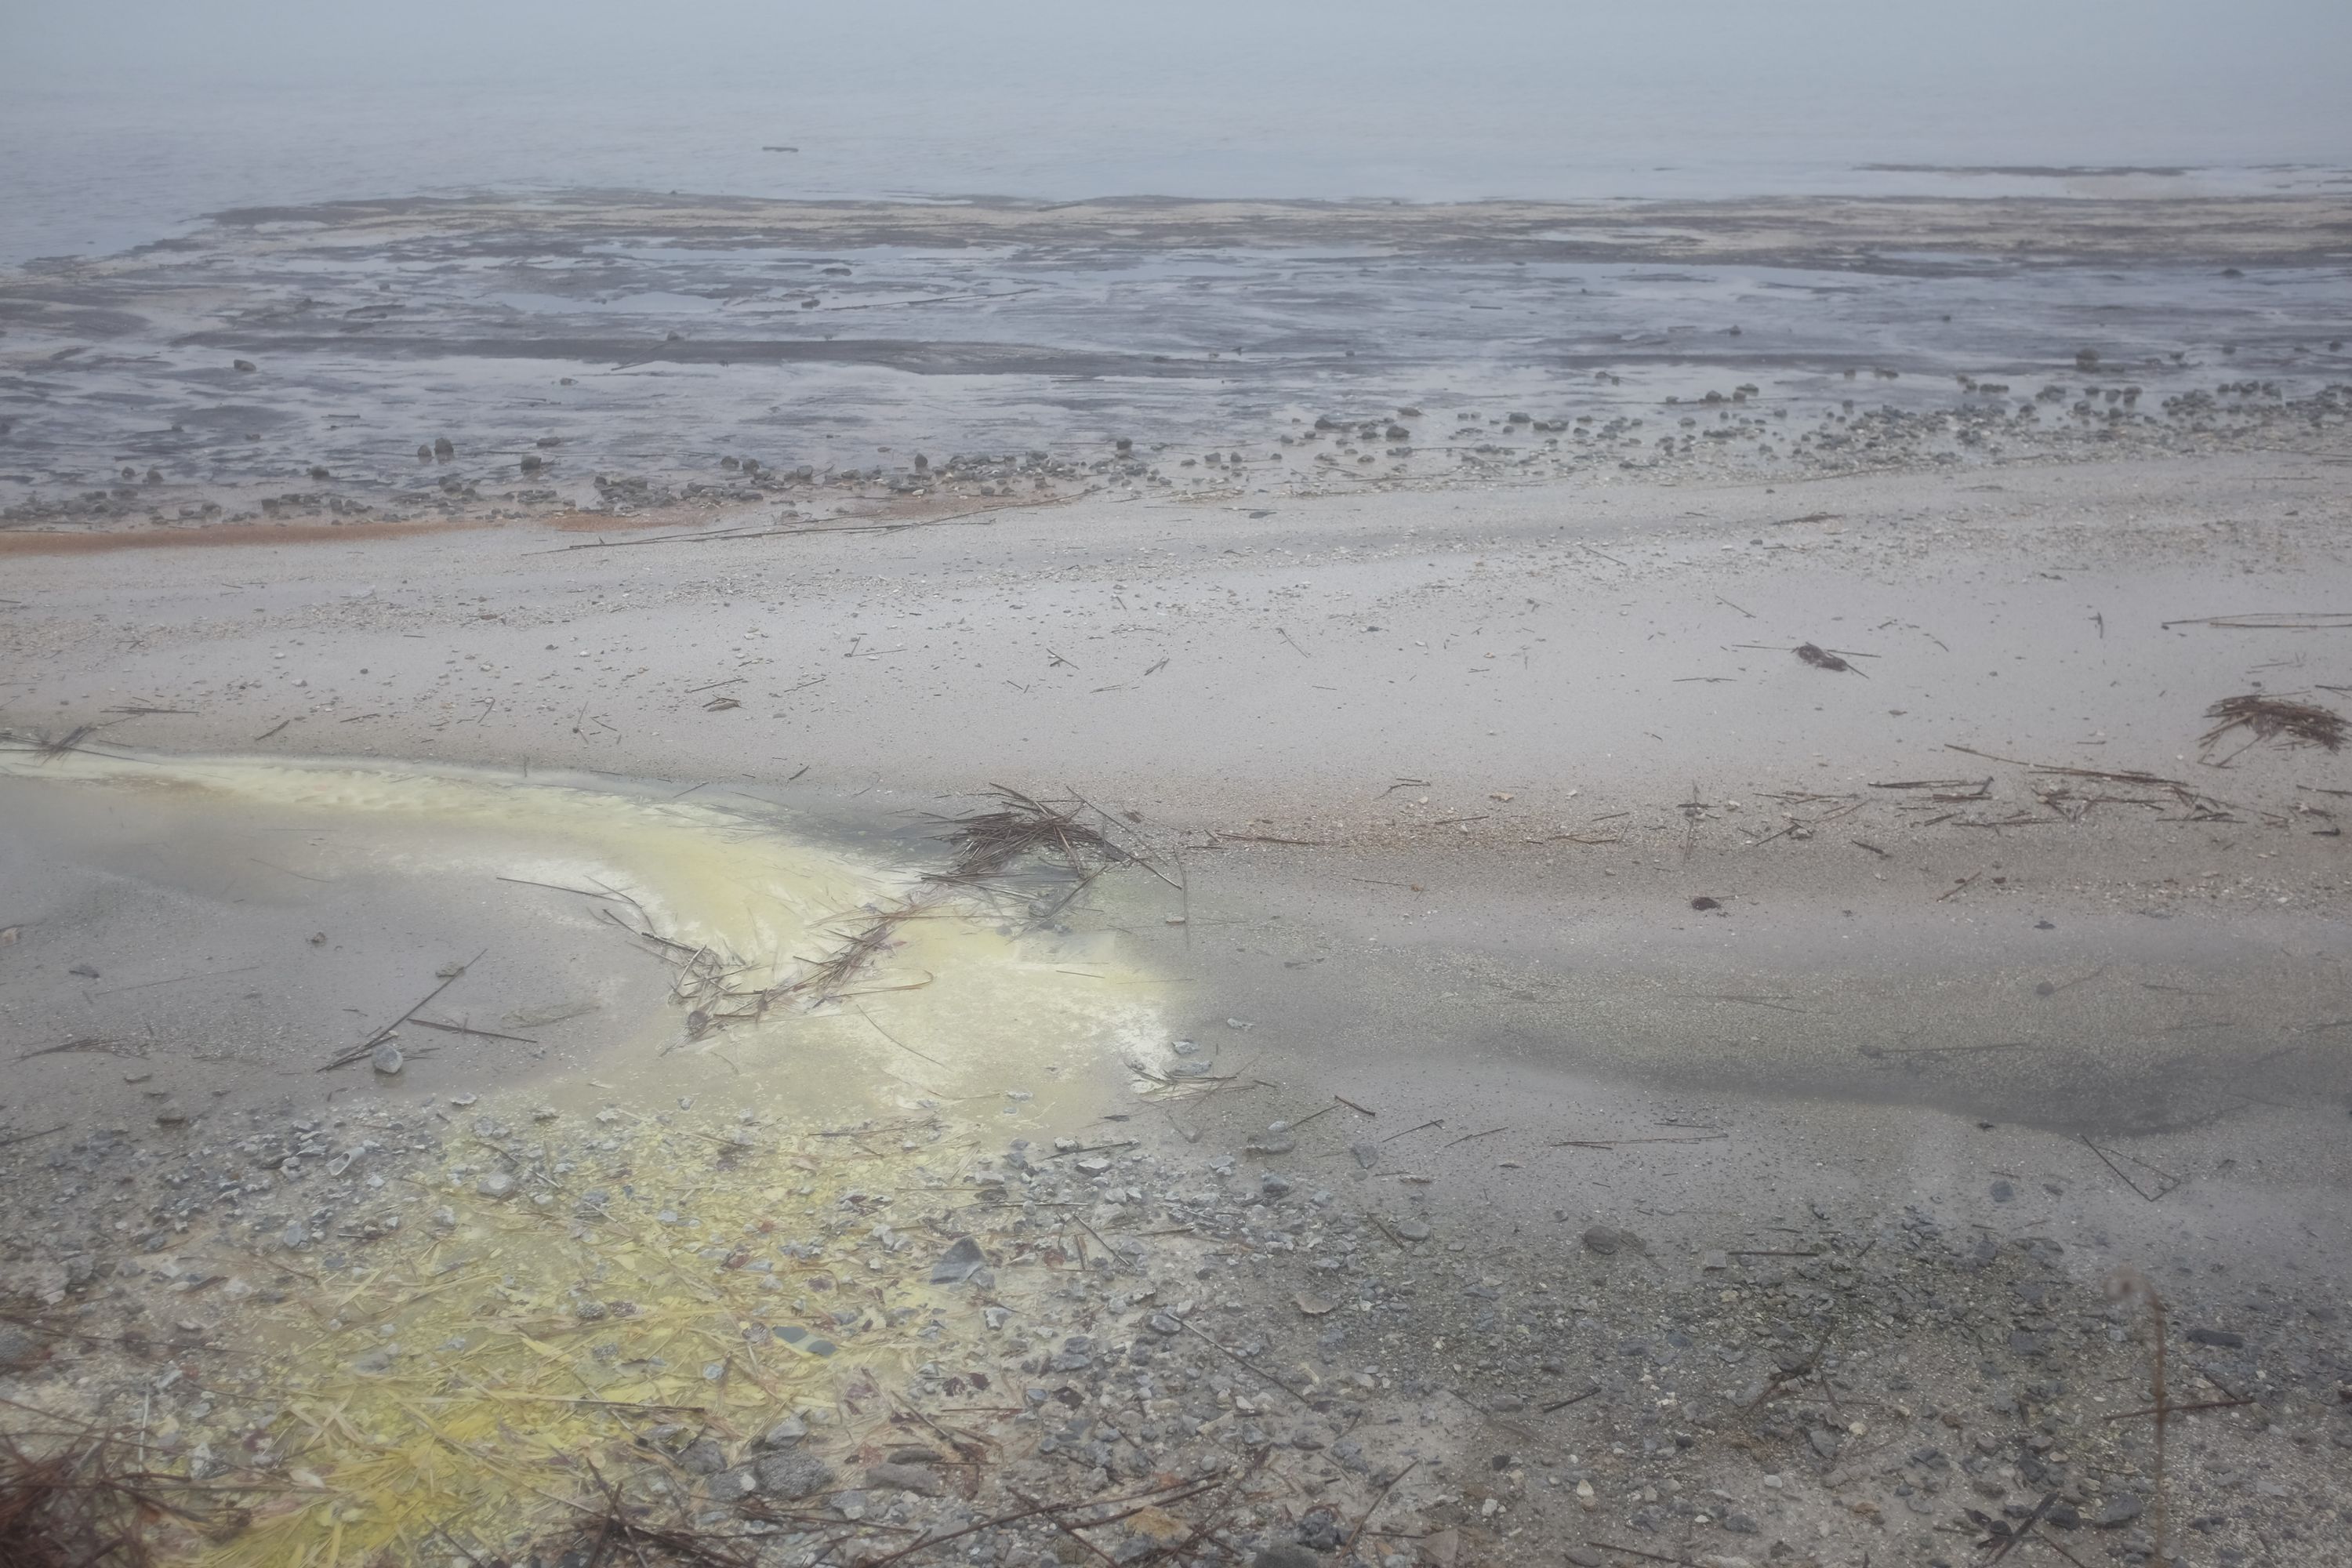 A sulphur deposit on a lakeshore.